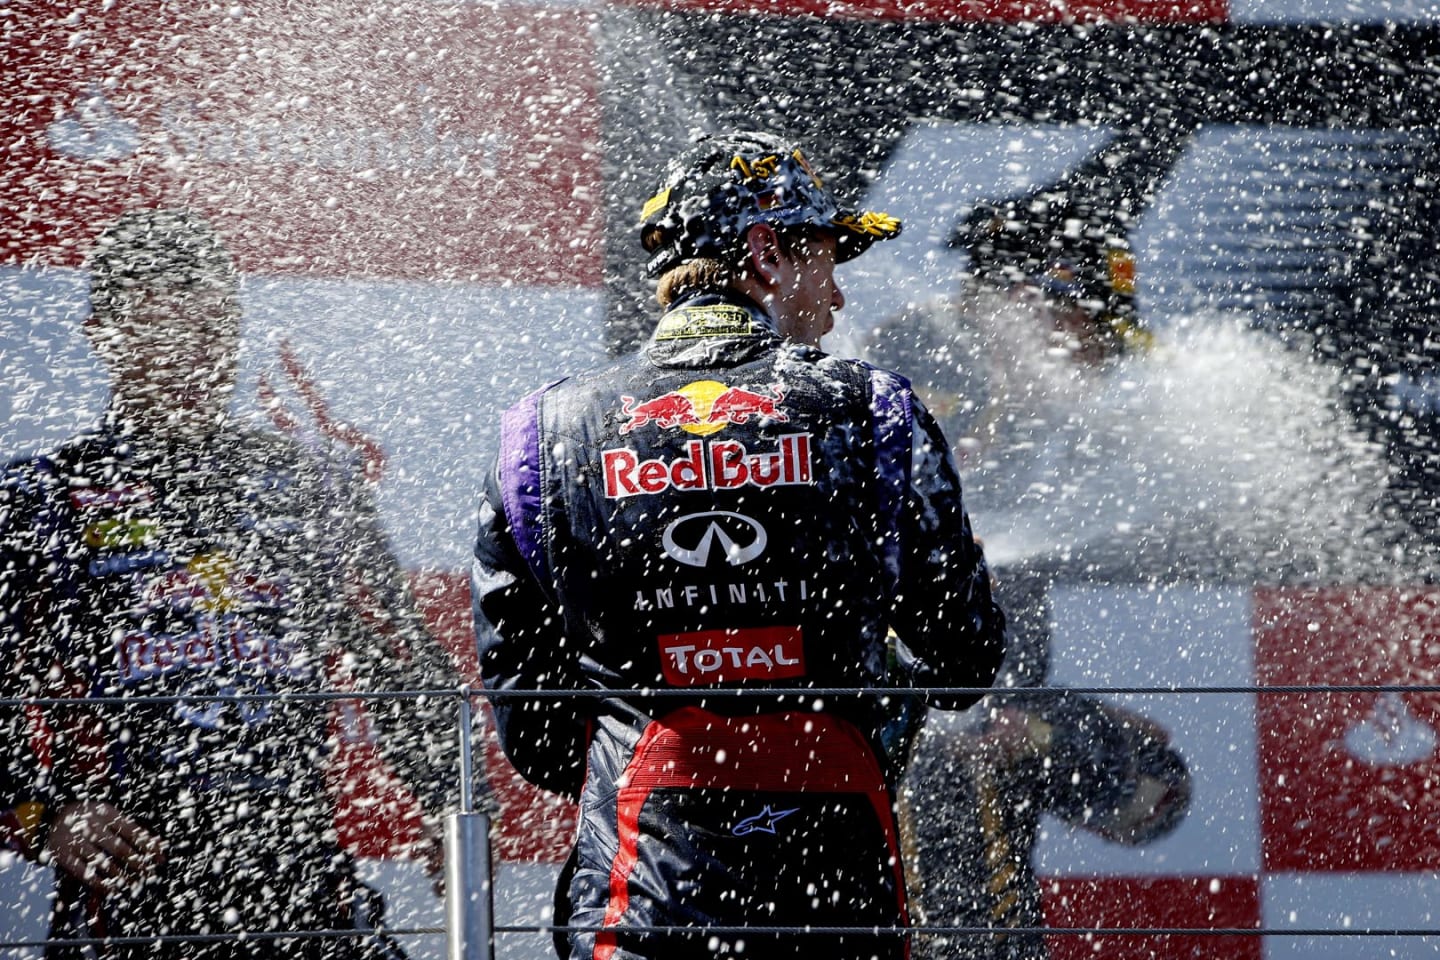 Nurburgring, Germany
7th July 2013
Champagne flies as Sebastian Vettel, Red Bull Racing, 1st